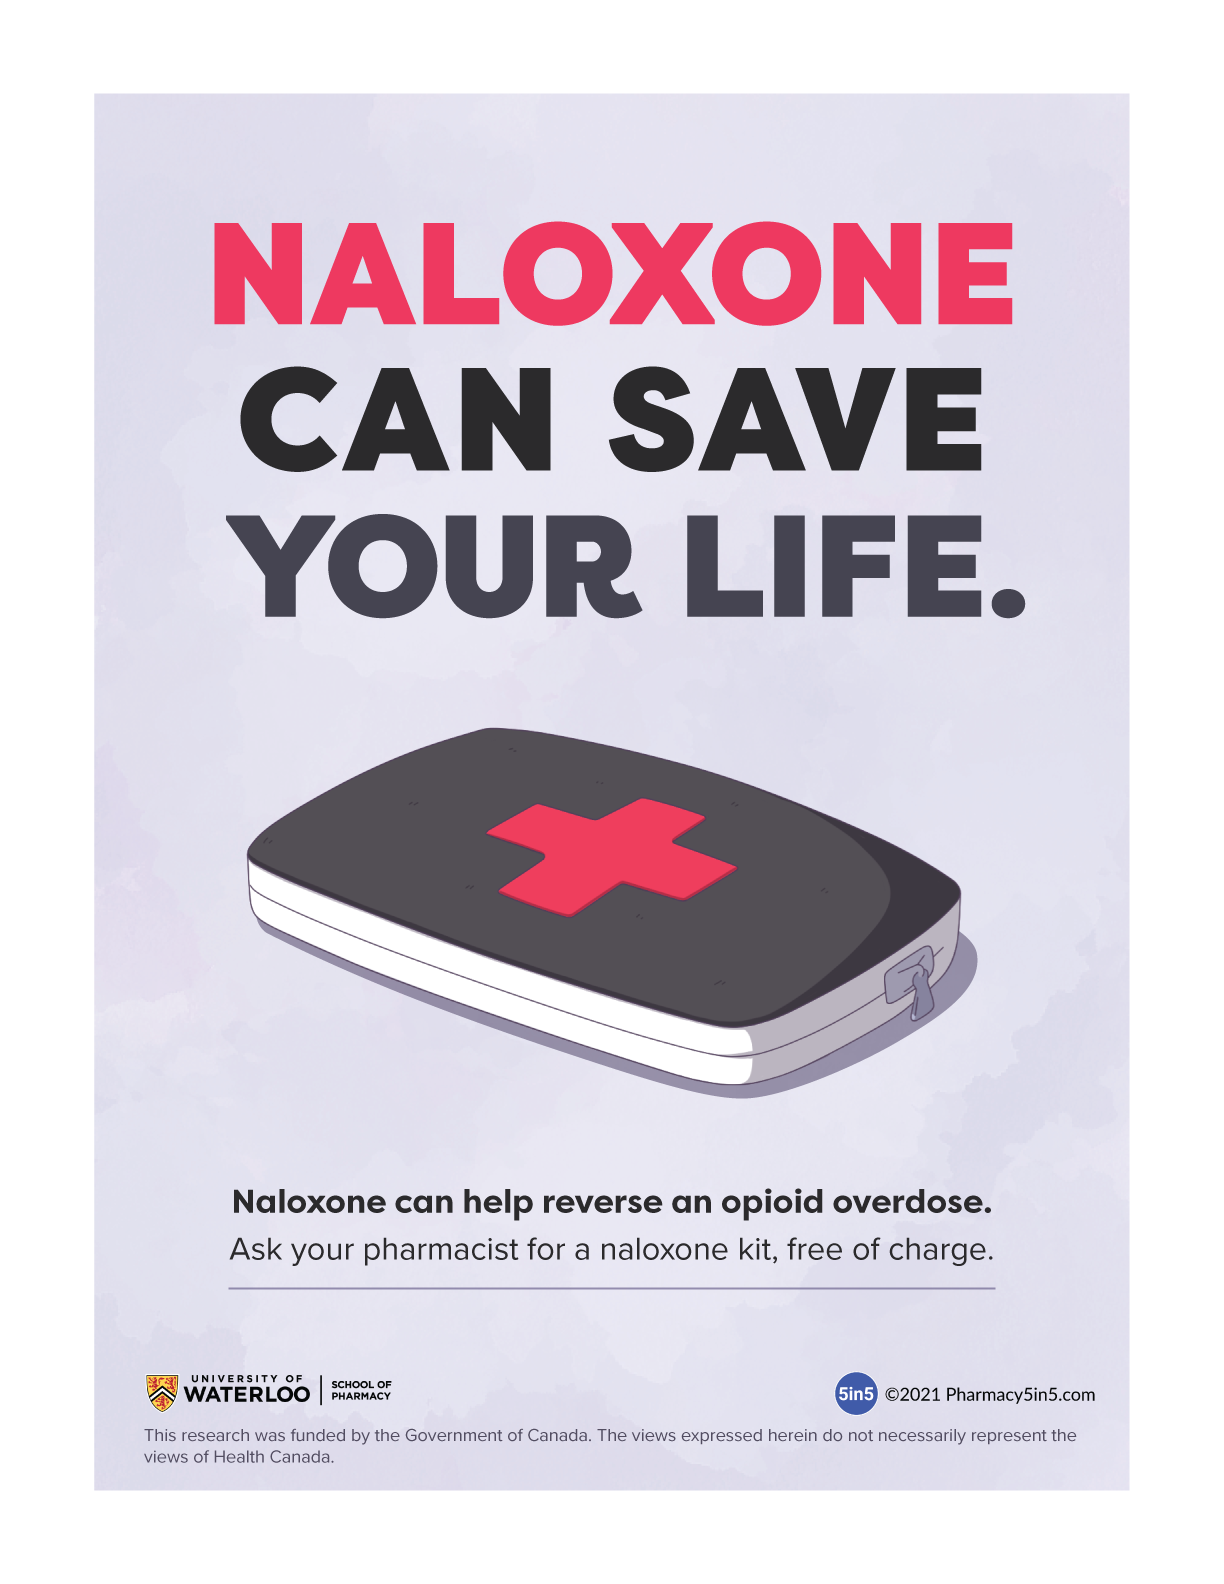 Naloxone can save your life poster